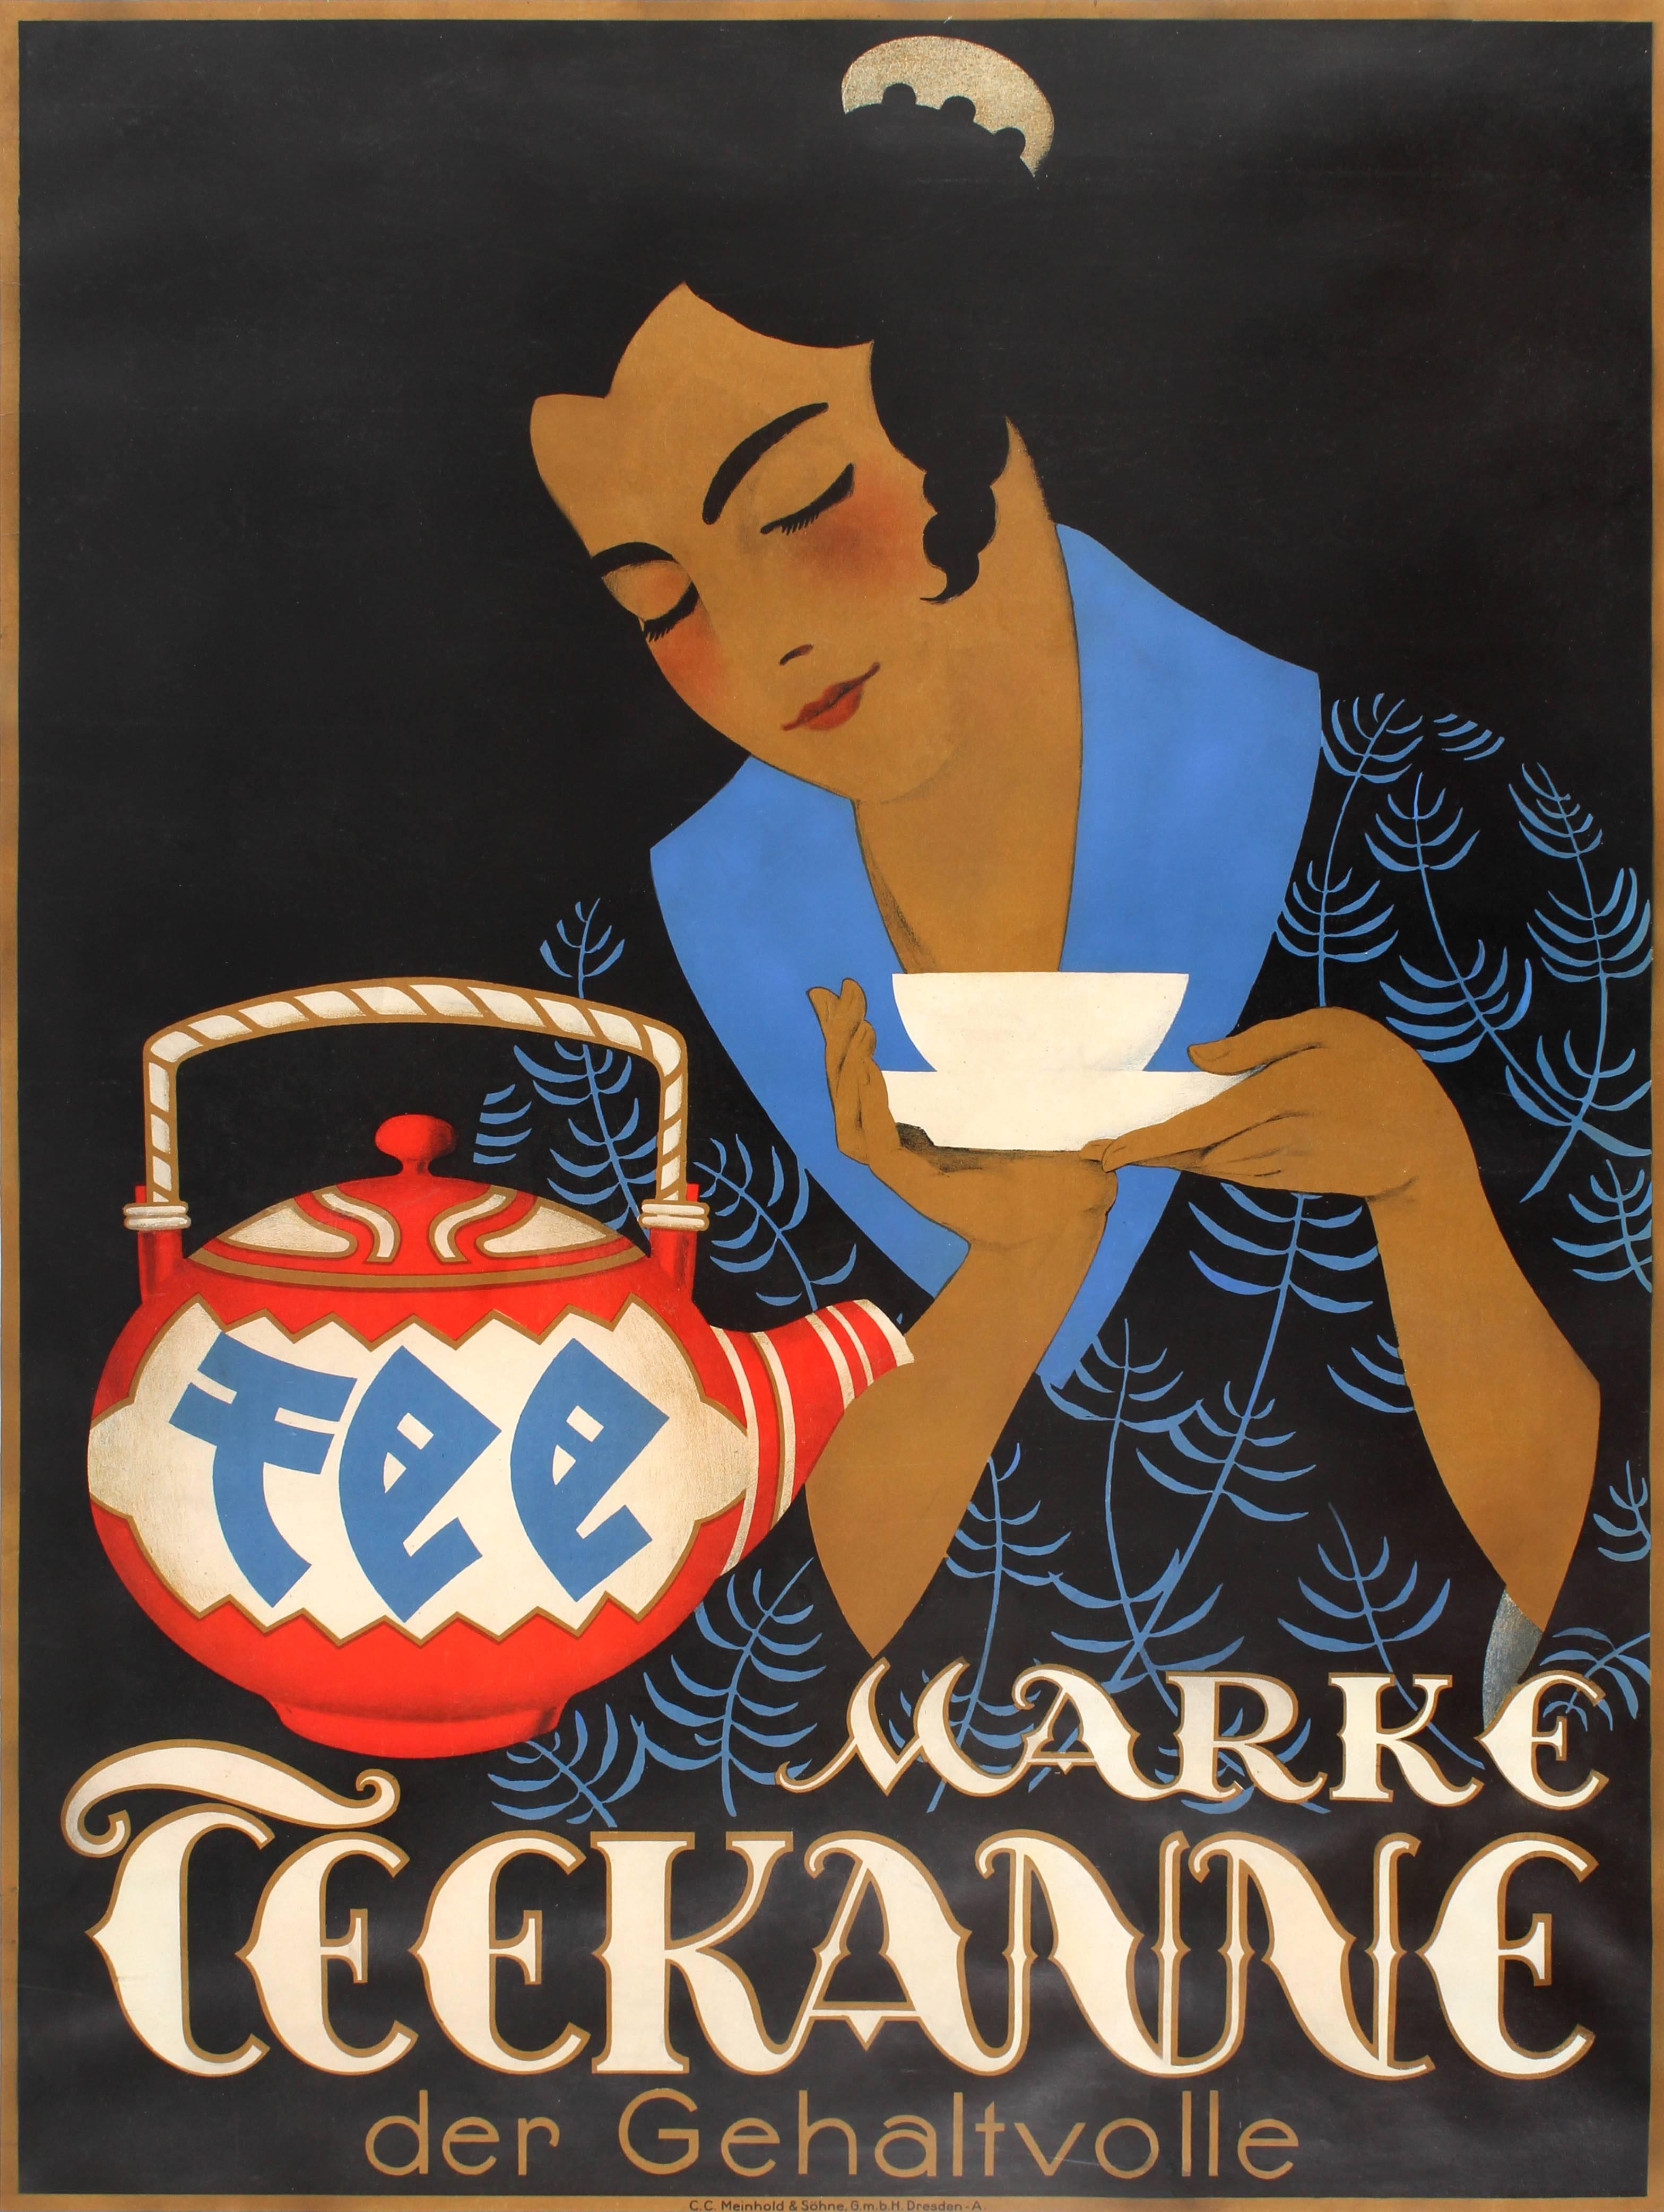 Heinrich Molge and Jupp Wiertz Print - Original Vintage Drink Advertising Poster For Quality Brand Tea - Marke Teekanne